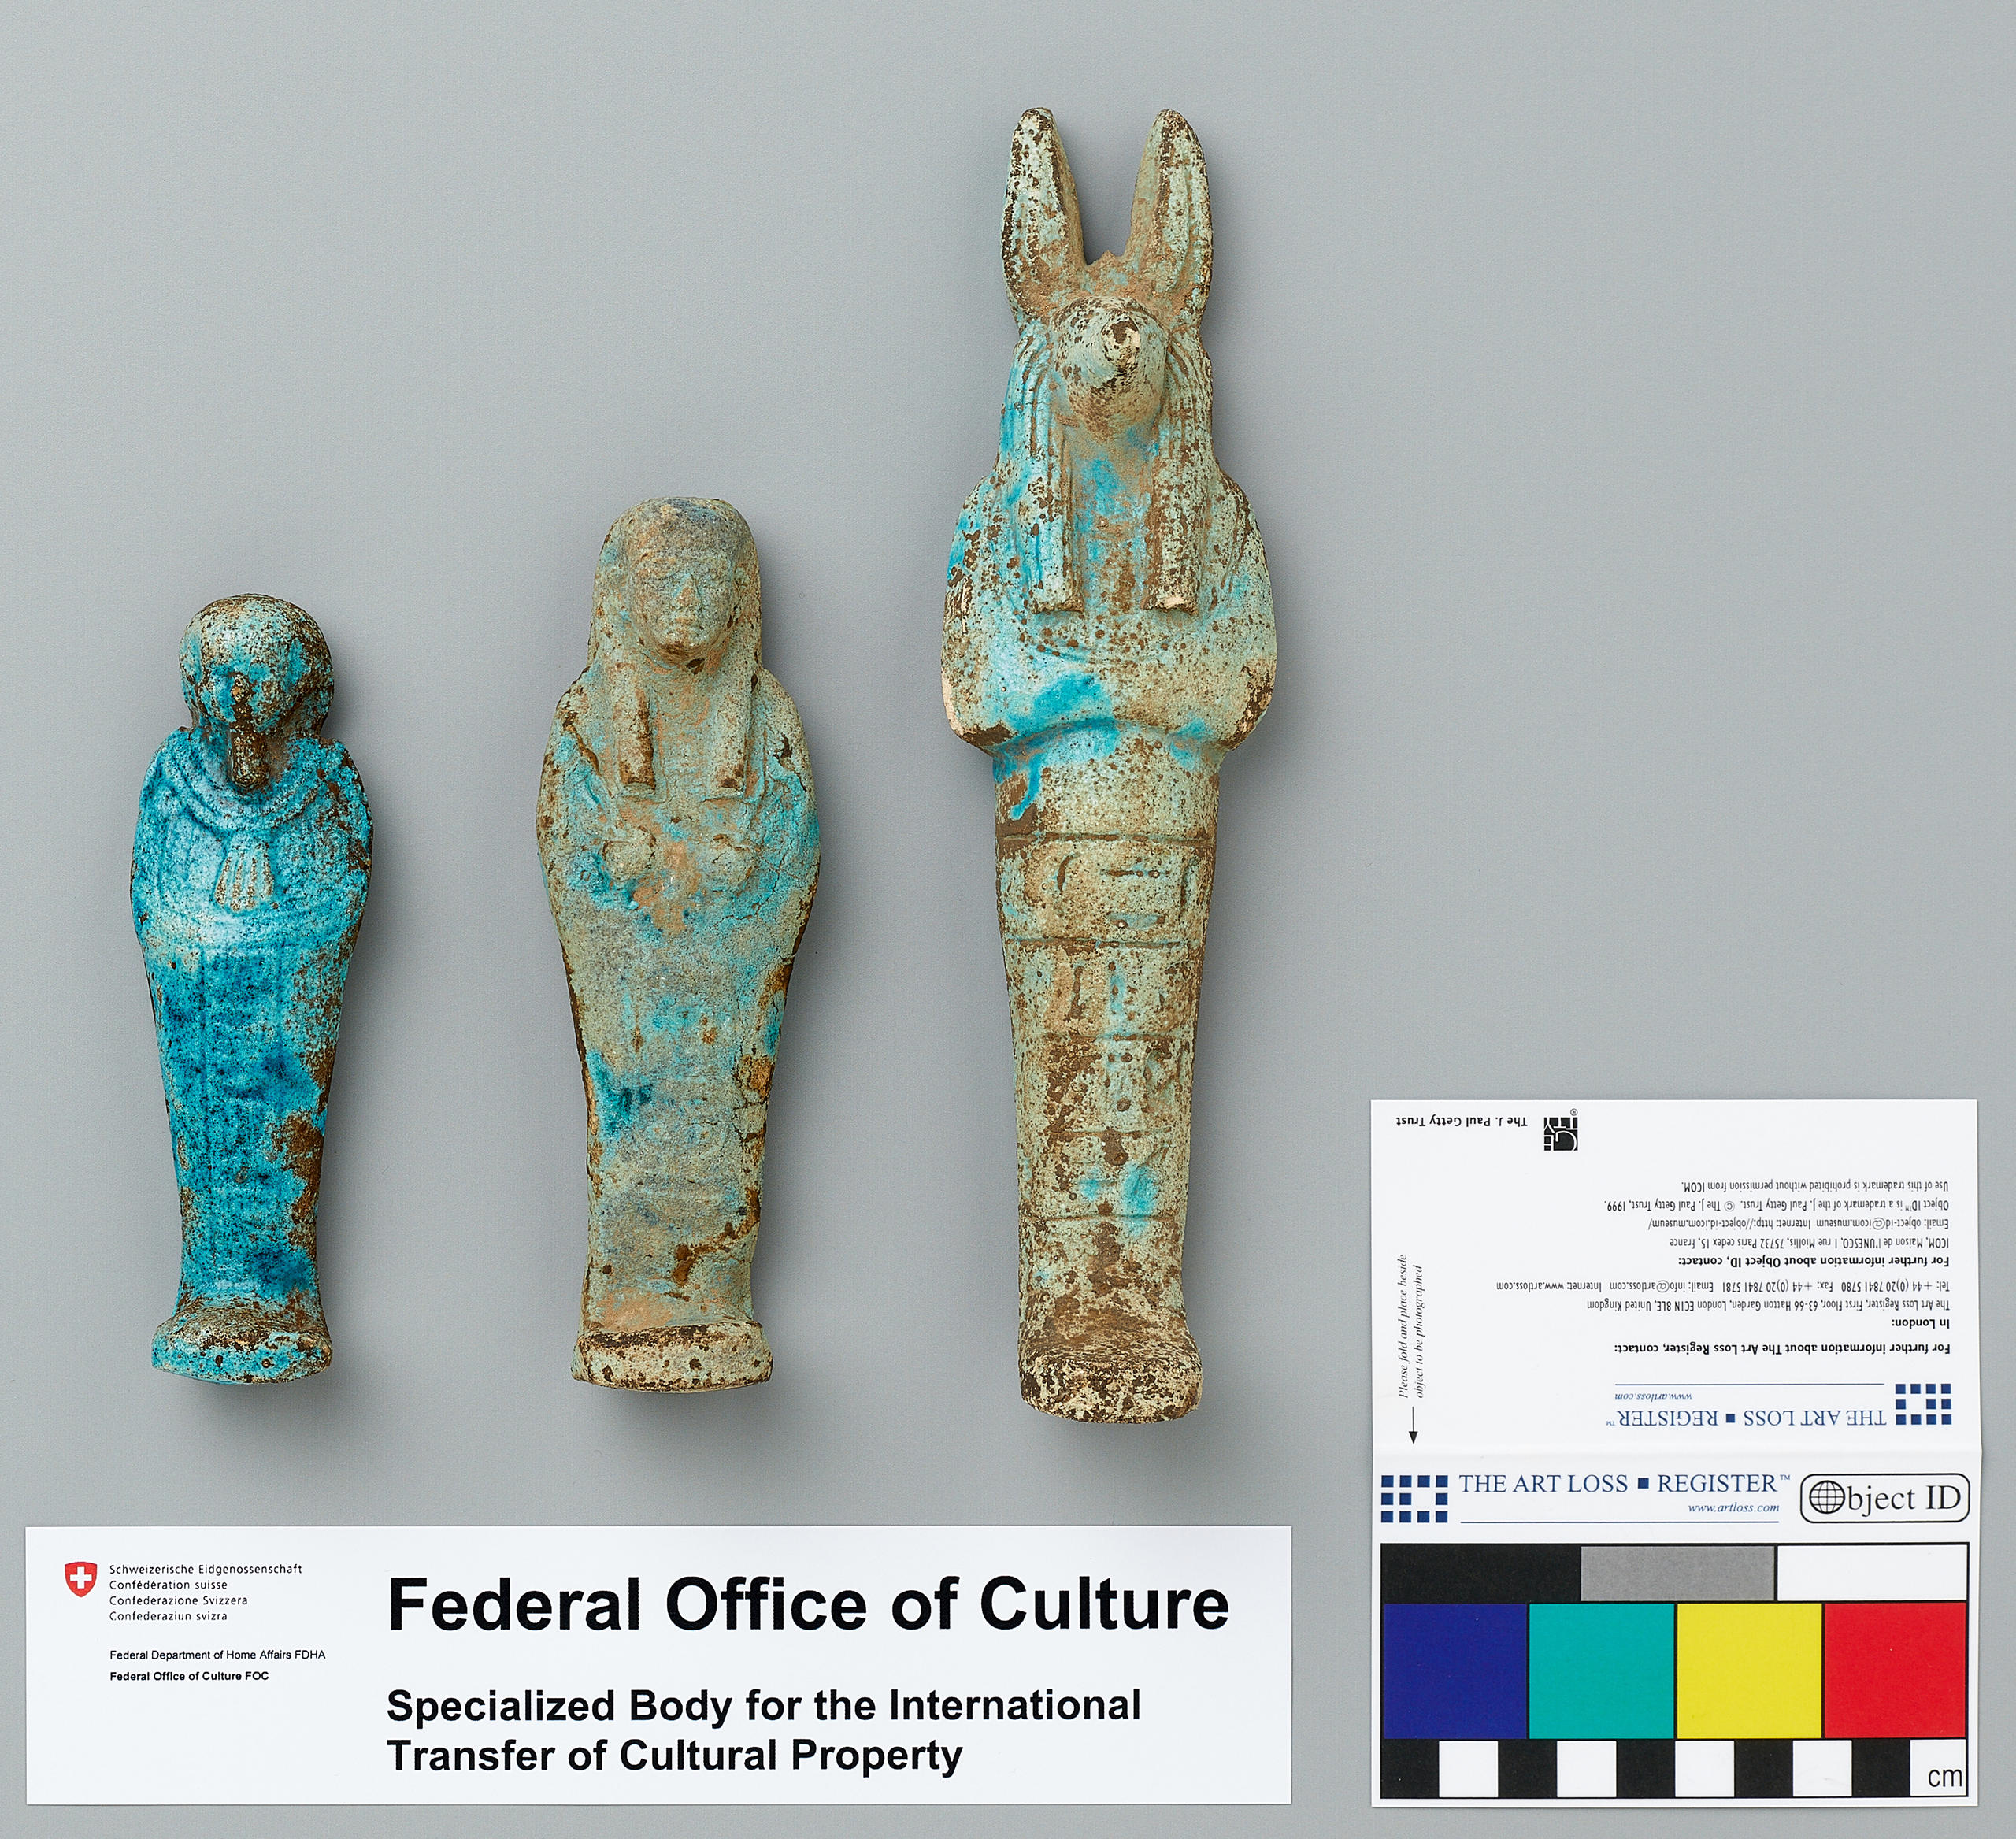 Three ancient Egyptian figurines